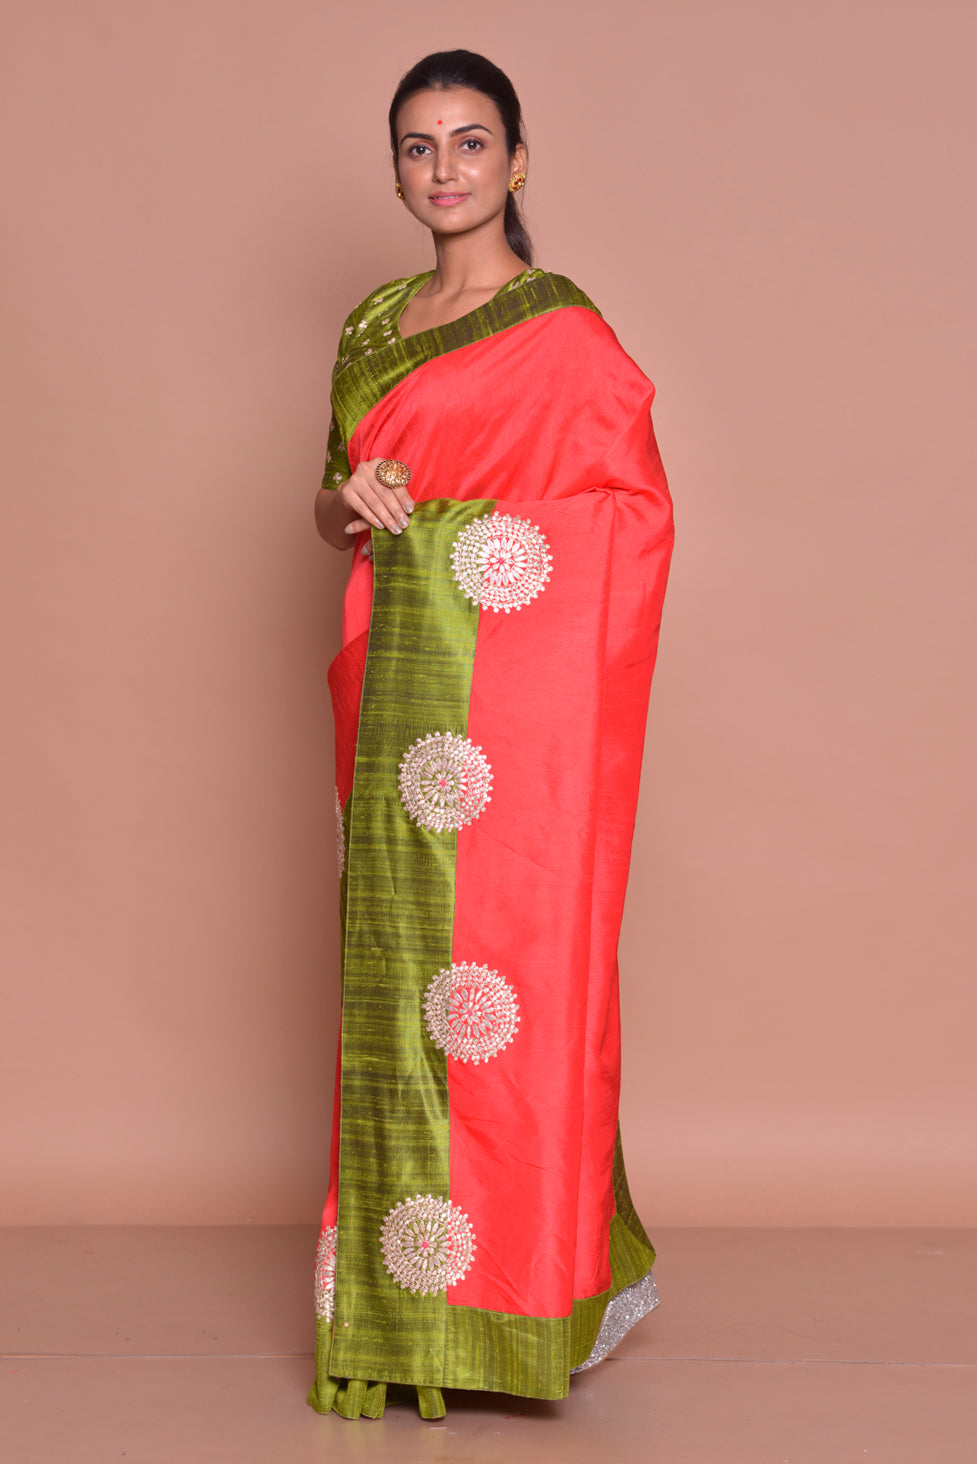 Buy lovely dark orange gota patti work silk saree online in USA with green sari blouse. Set ethnic fashion goals with exquisite designer sarees with blouse, Banarasi sarees, Kanchipuram saris from Pure Elegance Indian luxury clothing store in USA.-side